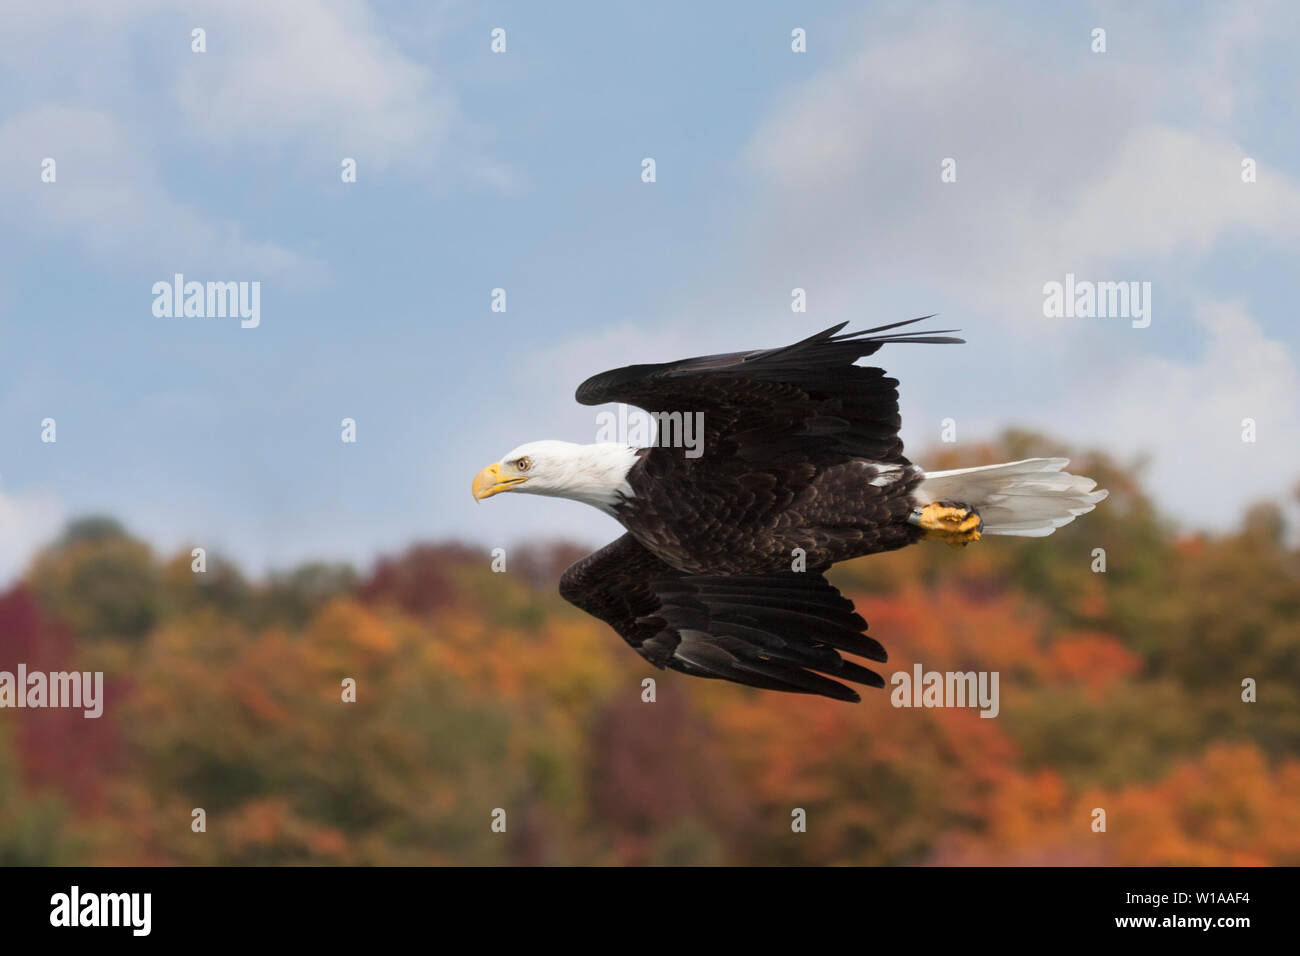 In maximum aerodynamic form, a bald eagle darts across an colorful autumn skyline. Stock Photo